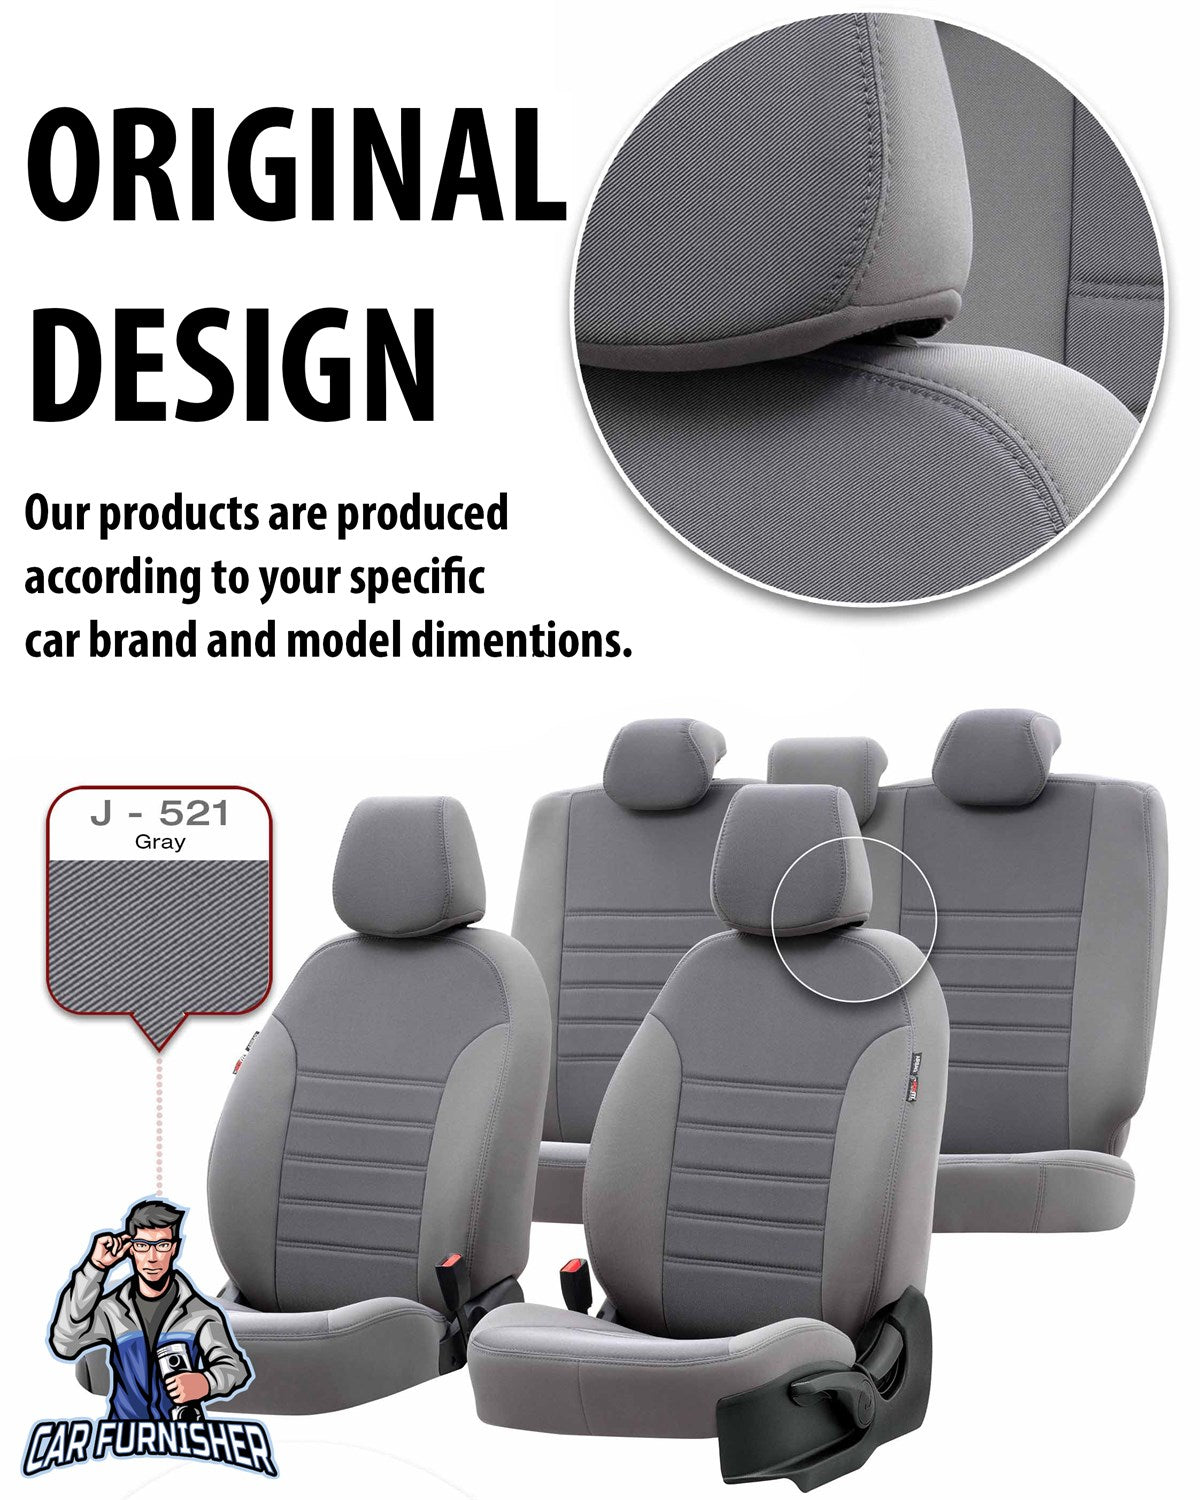 Volkswagen Caravelle Seat Cover Original Jacquard Design Smoked Jacquard Fabric